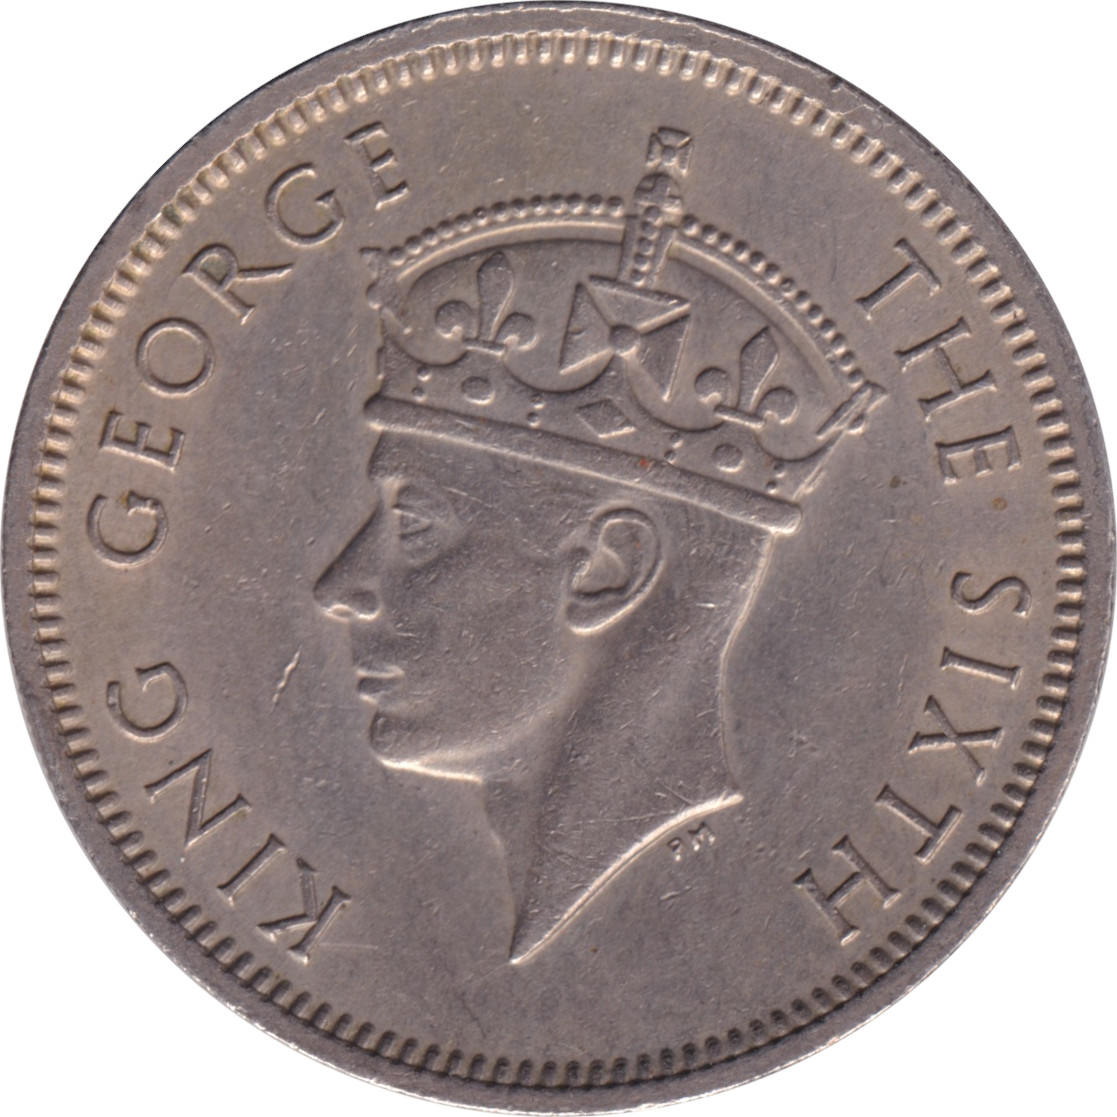 50 cents - George VI